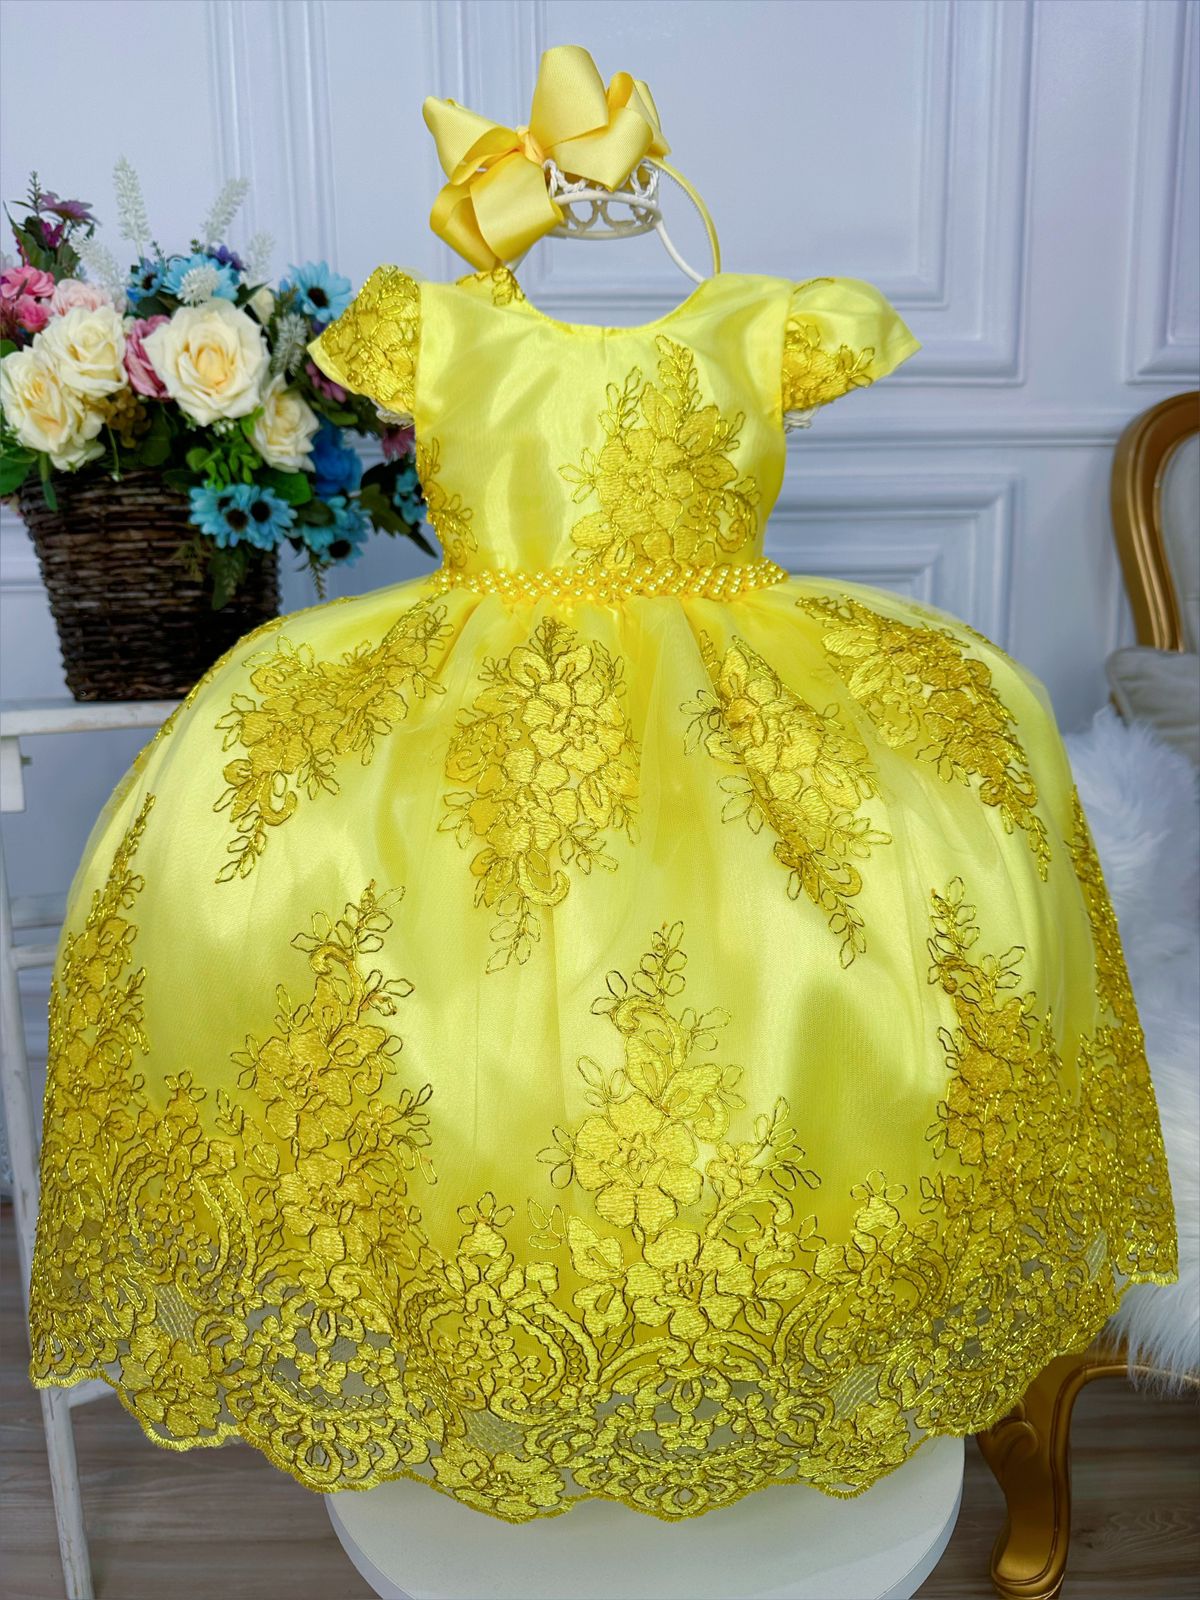 Vestido Infantil Amarelo C/ Renda Realeza e Cinto de Pérolas